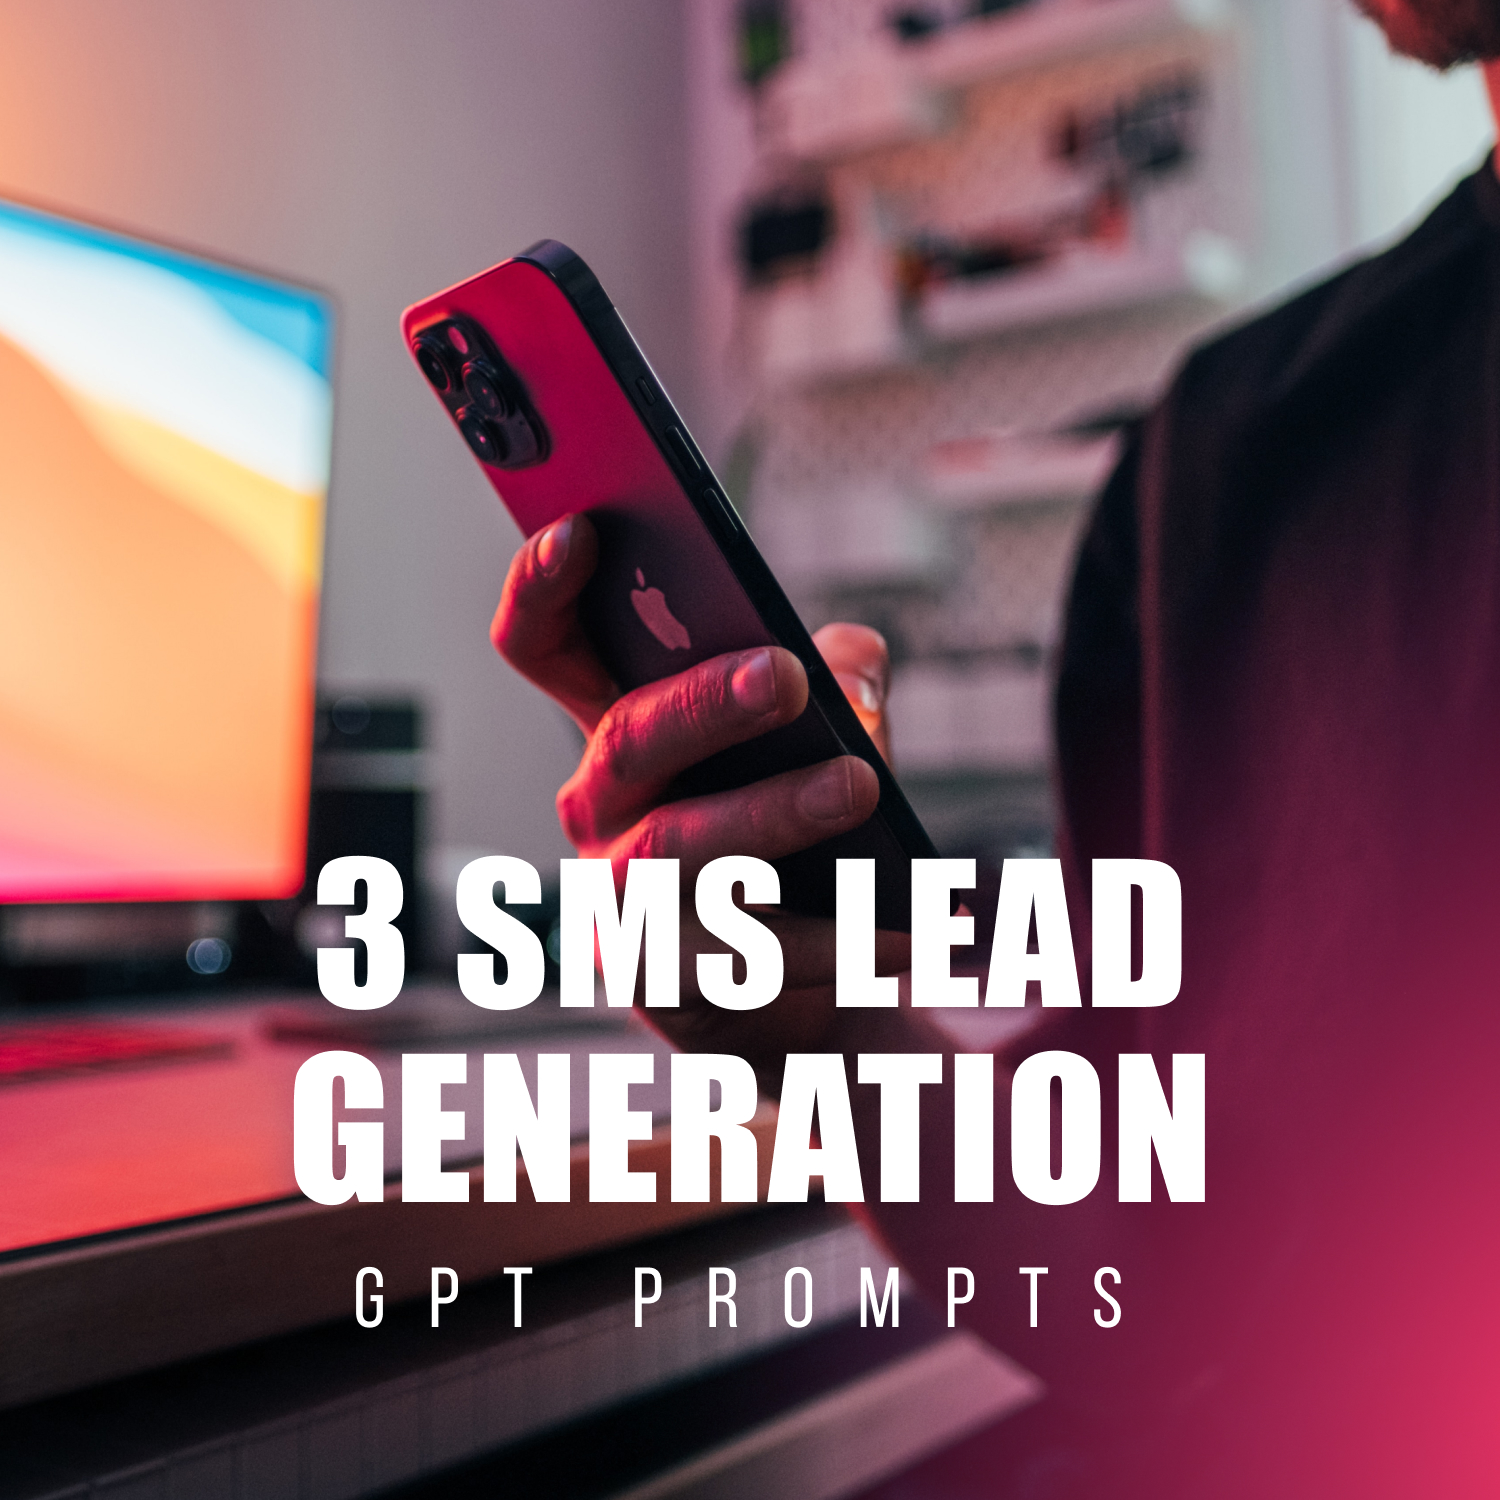 3 sms lead generation 294